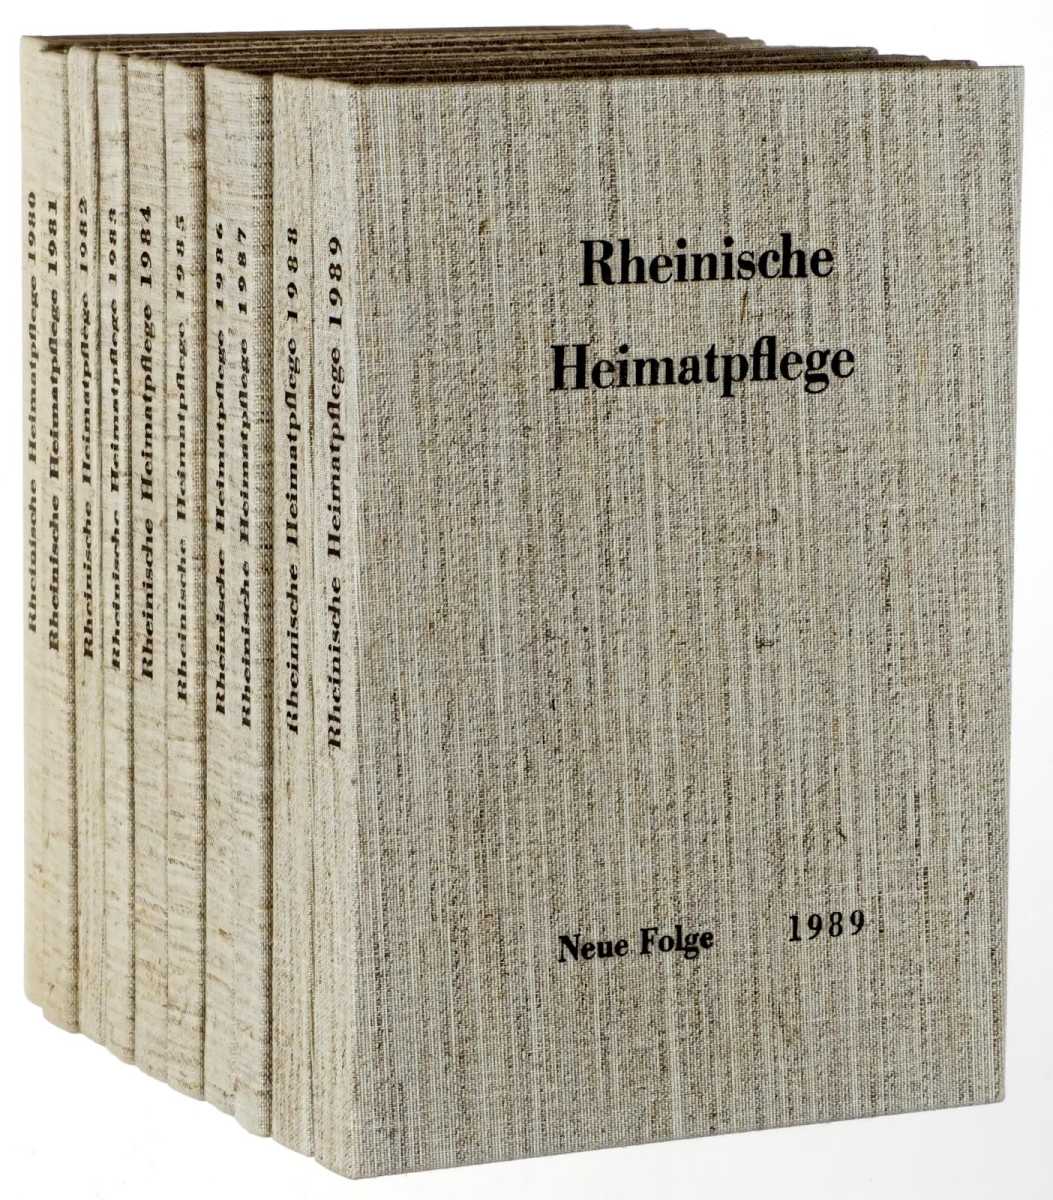   Rheinische Heimatpflege. Neue Folge. 1980-1989. 